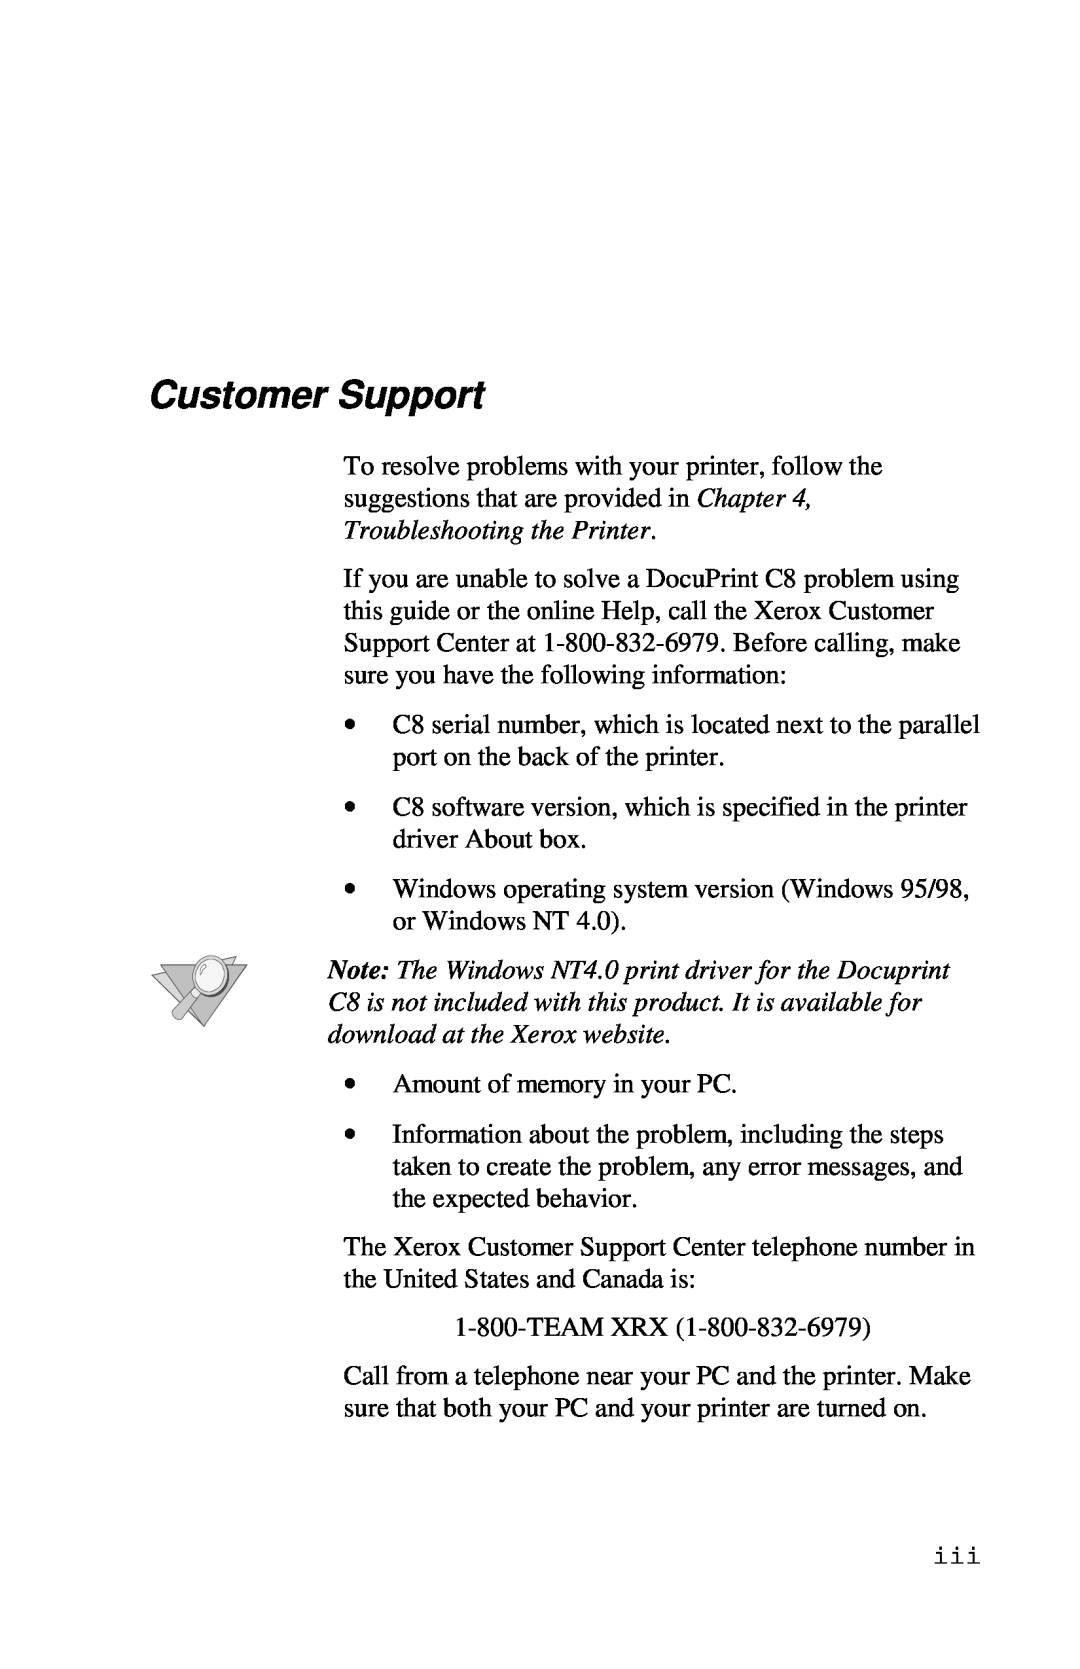 Xerox Inkjet Printer manual Customer Support 